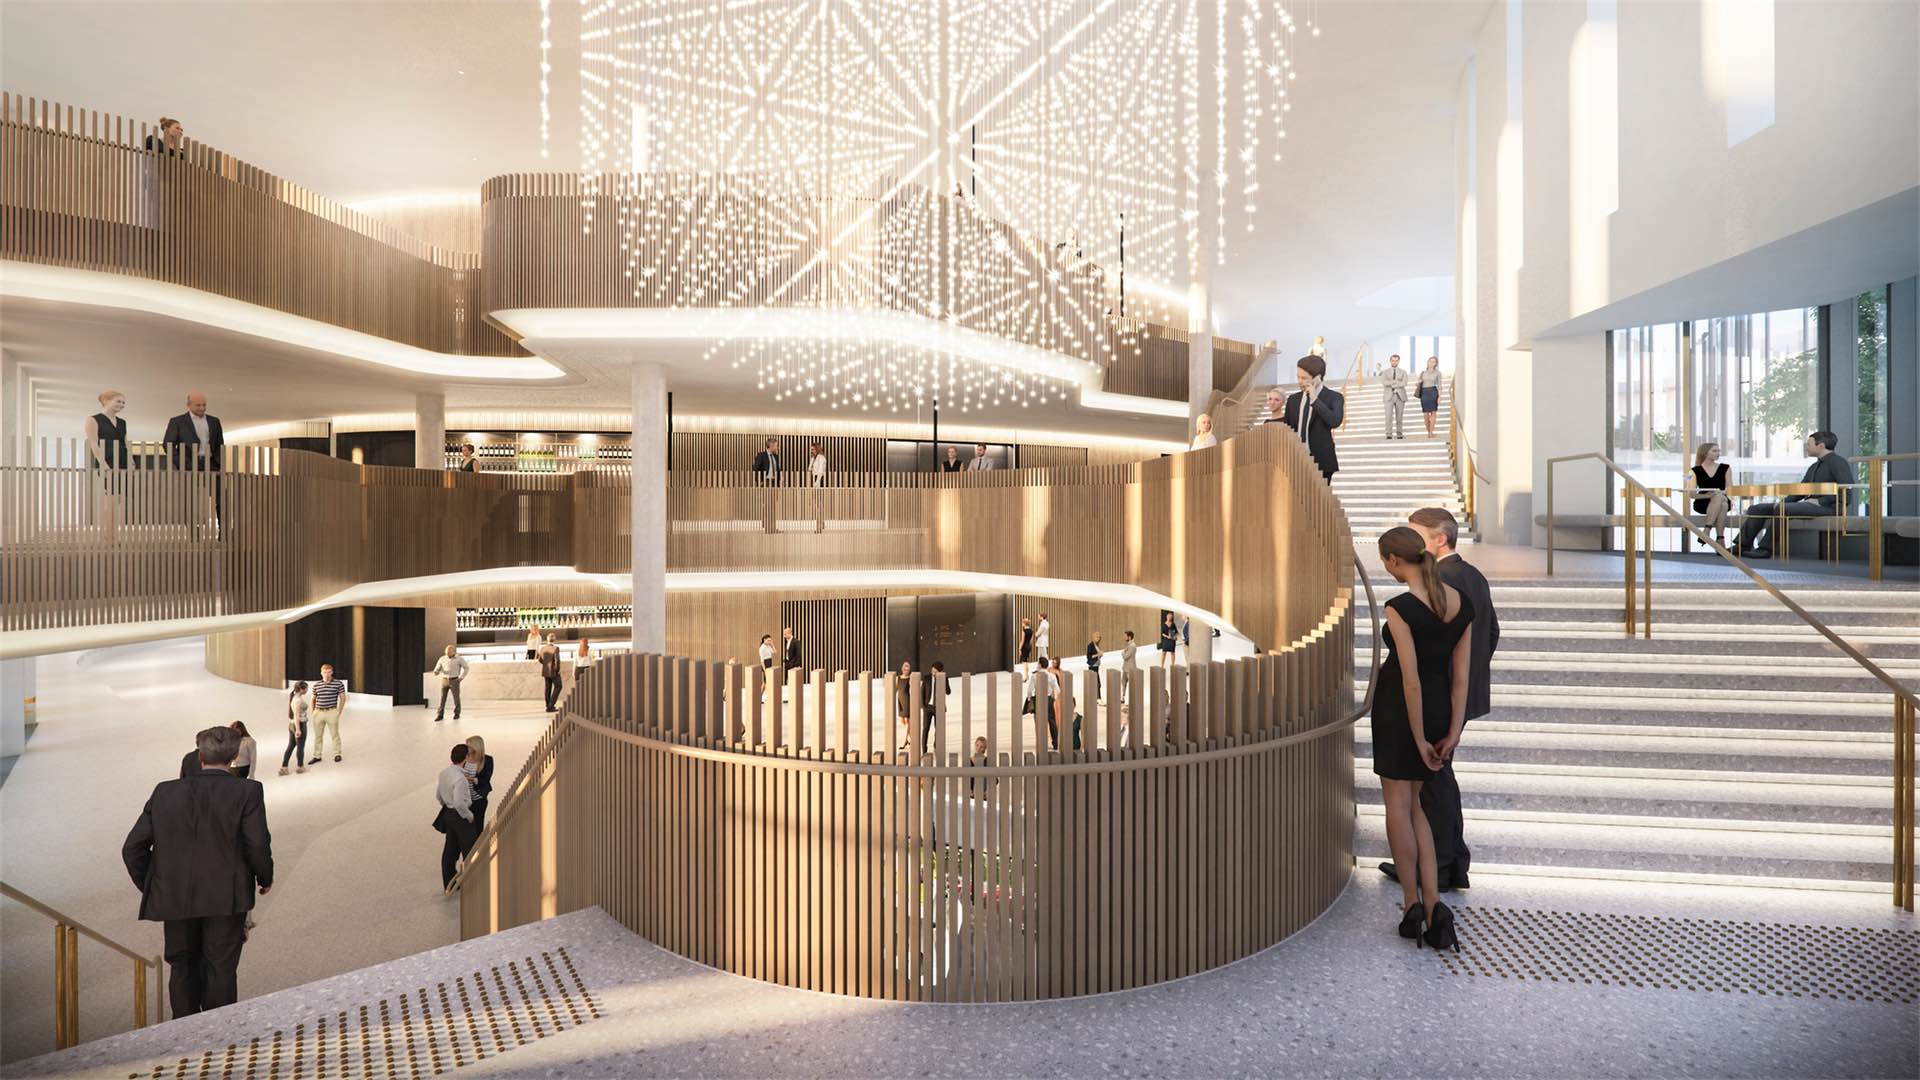 Pokies Profits Will be Used to Build Western Sydney's New $100 Million Arts Centre